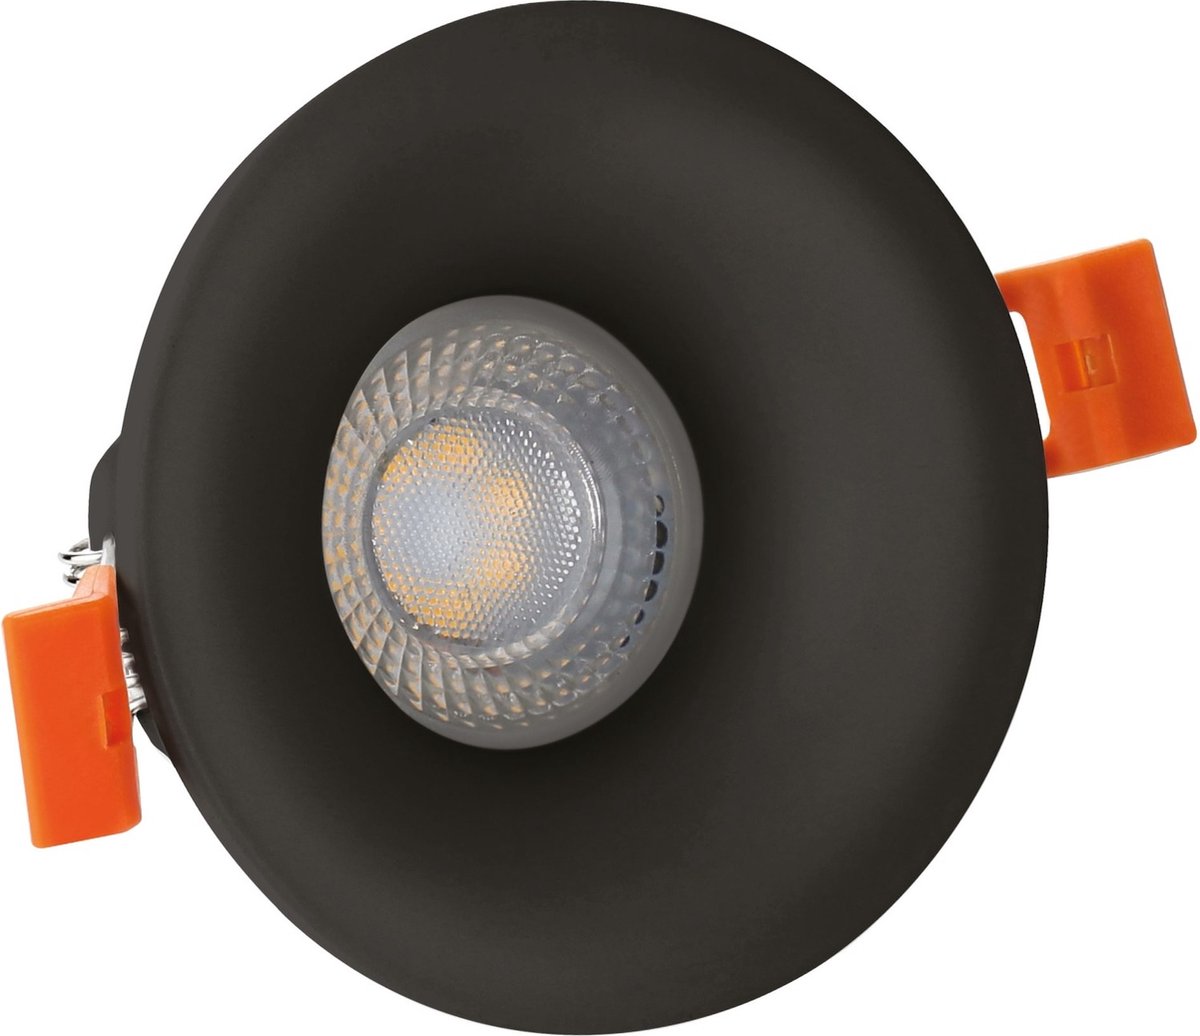 LED GU10 inbouwspot rond zwart - zaagmaat 74mm - incl. GU10 fitting met montagebeugel